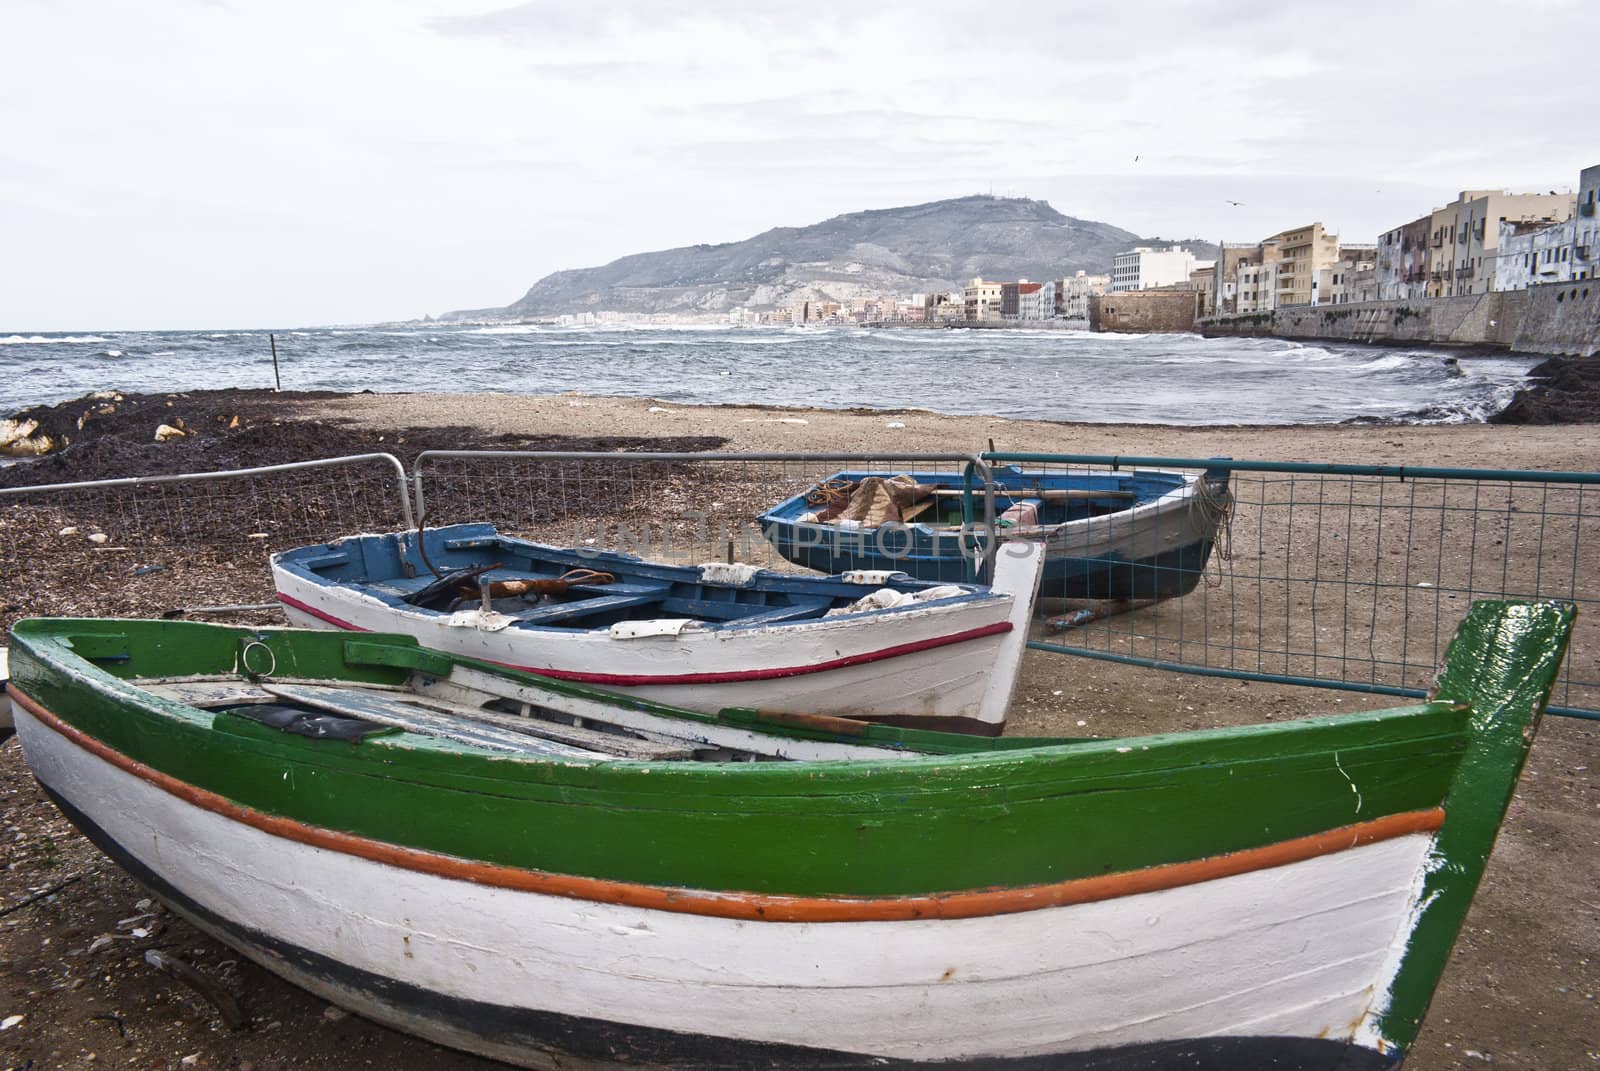 Boats in the marina of trapani by gandolfocannatella